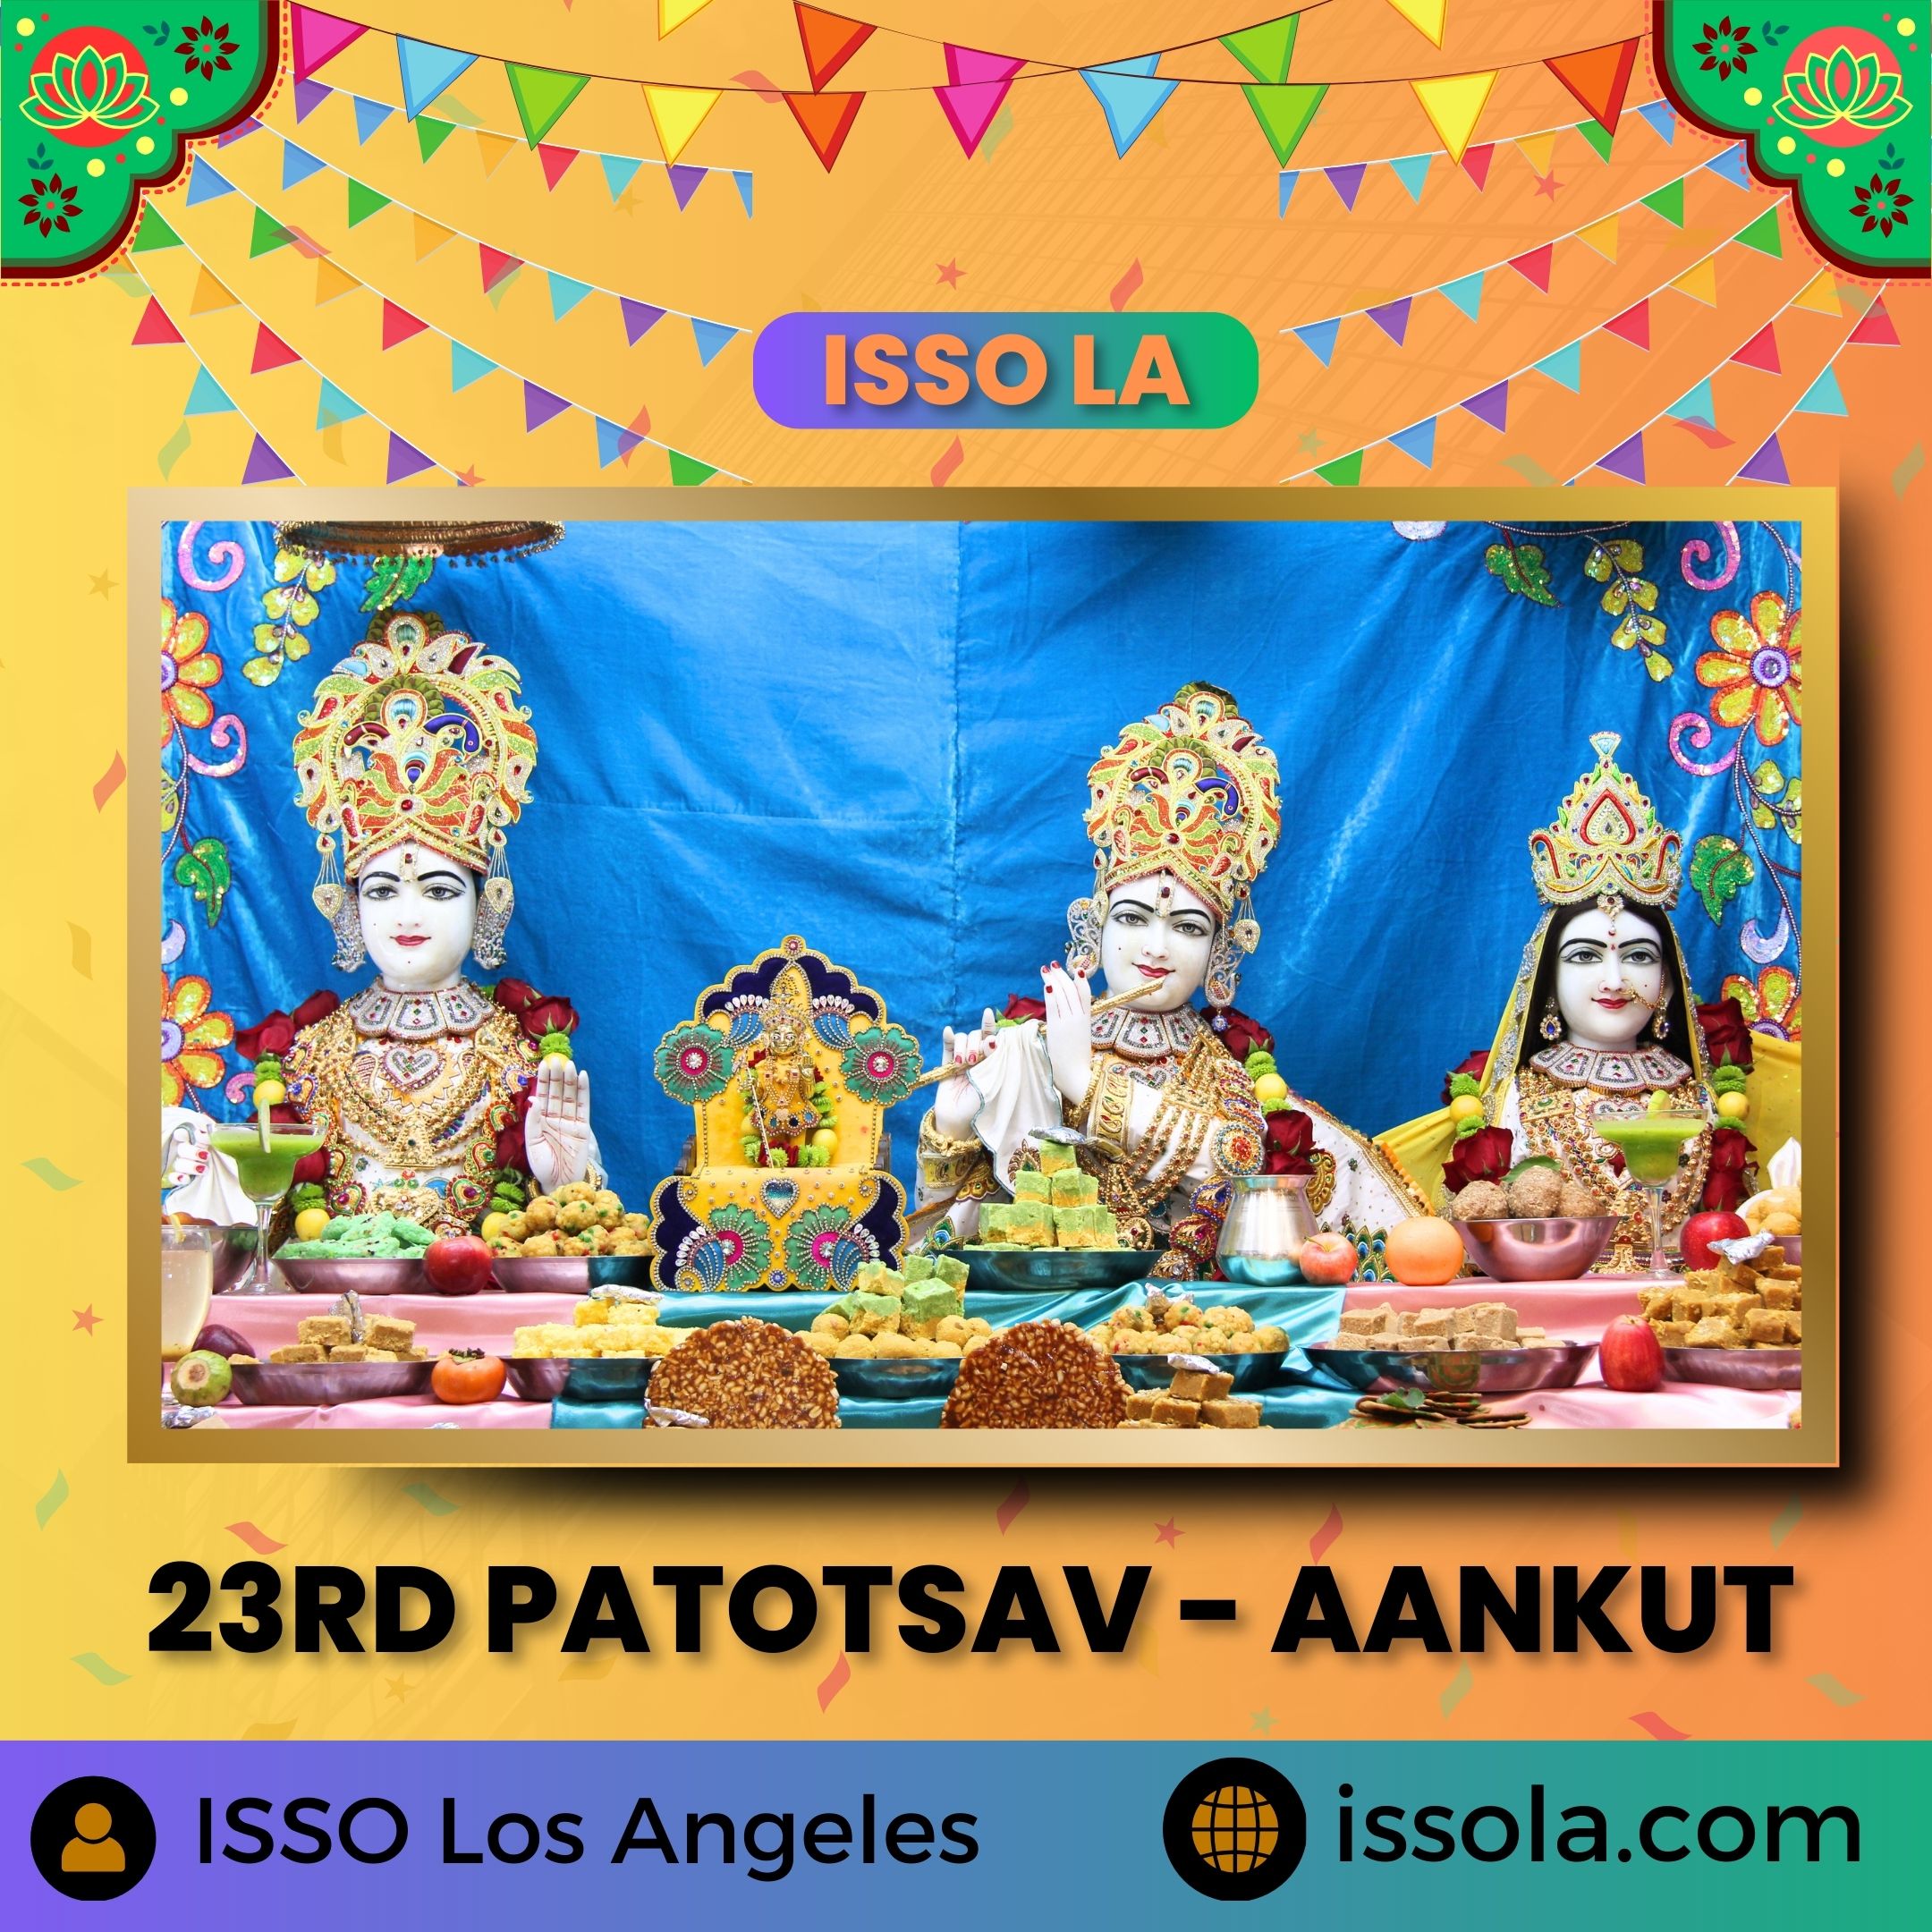 23rd Patotsav Day 3- Annakut - ISSO Swaminarayan Temple, Norwalk, Los Angeles, www.issola.com